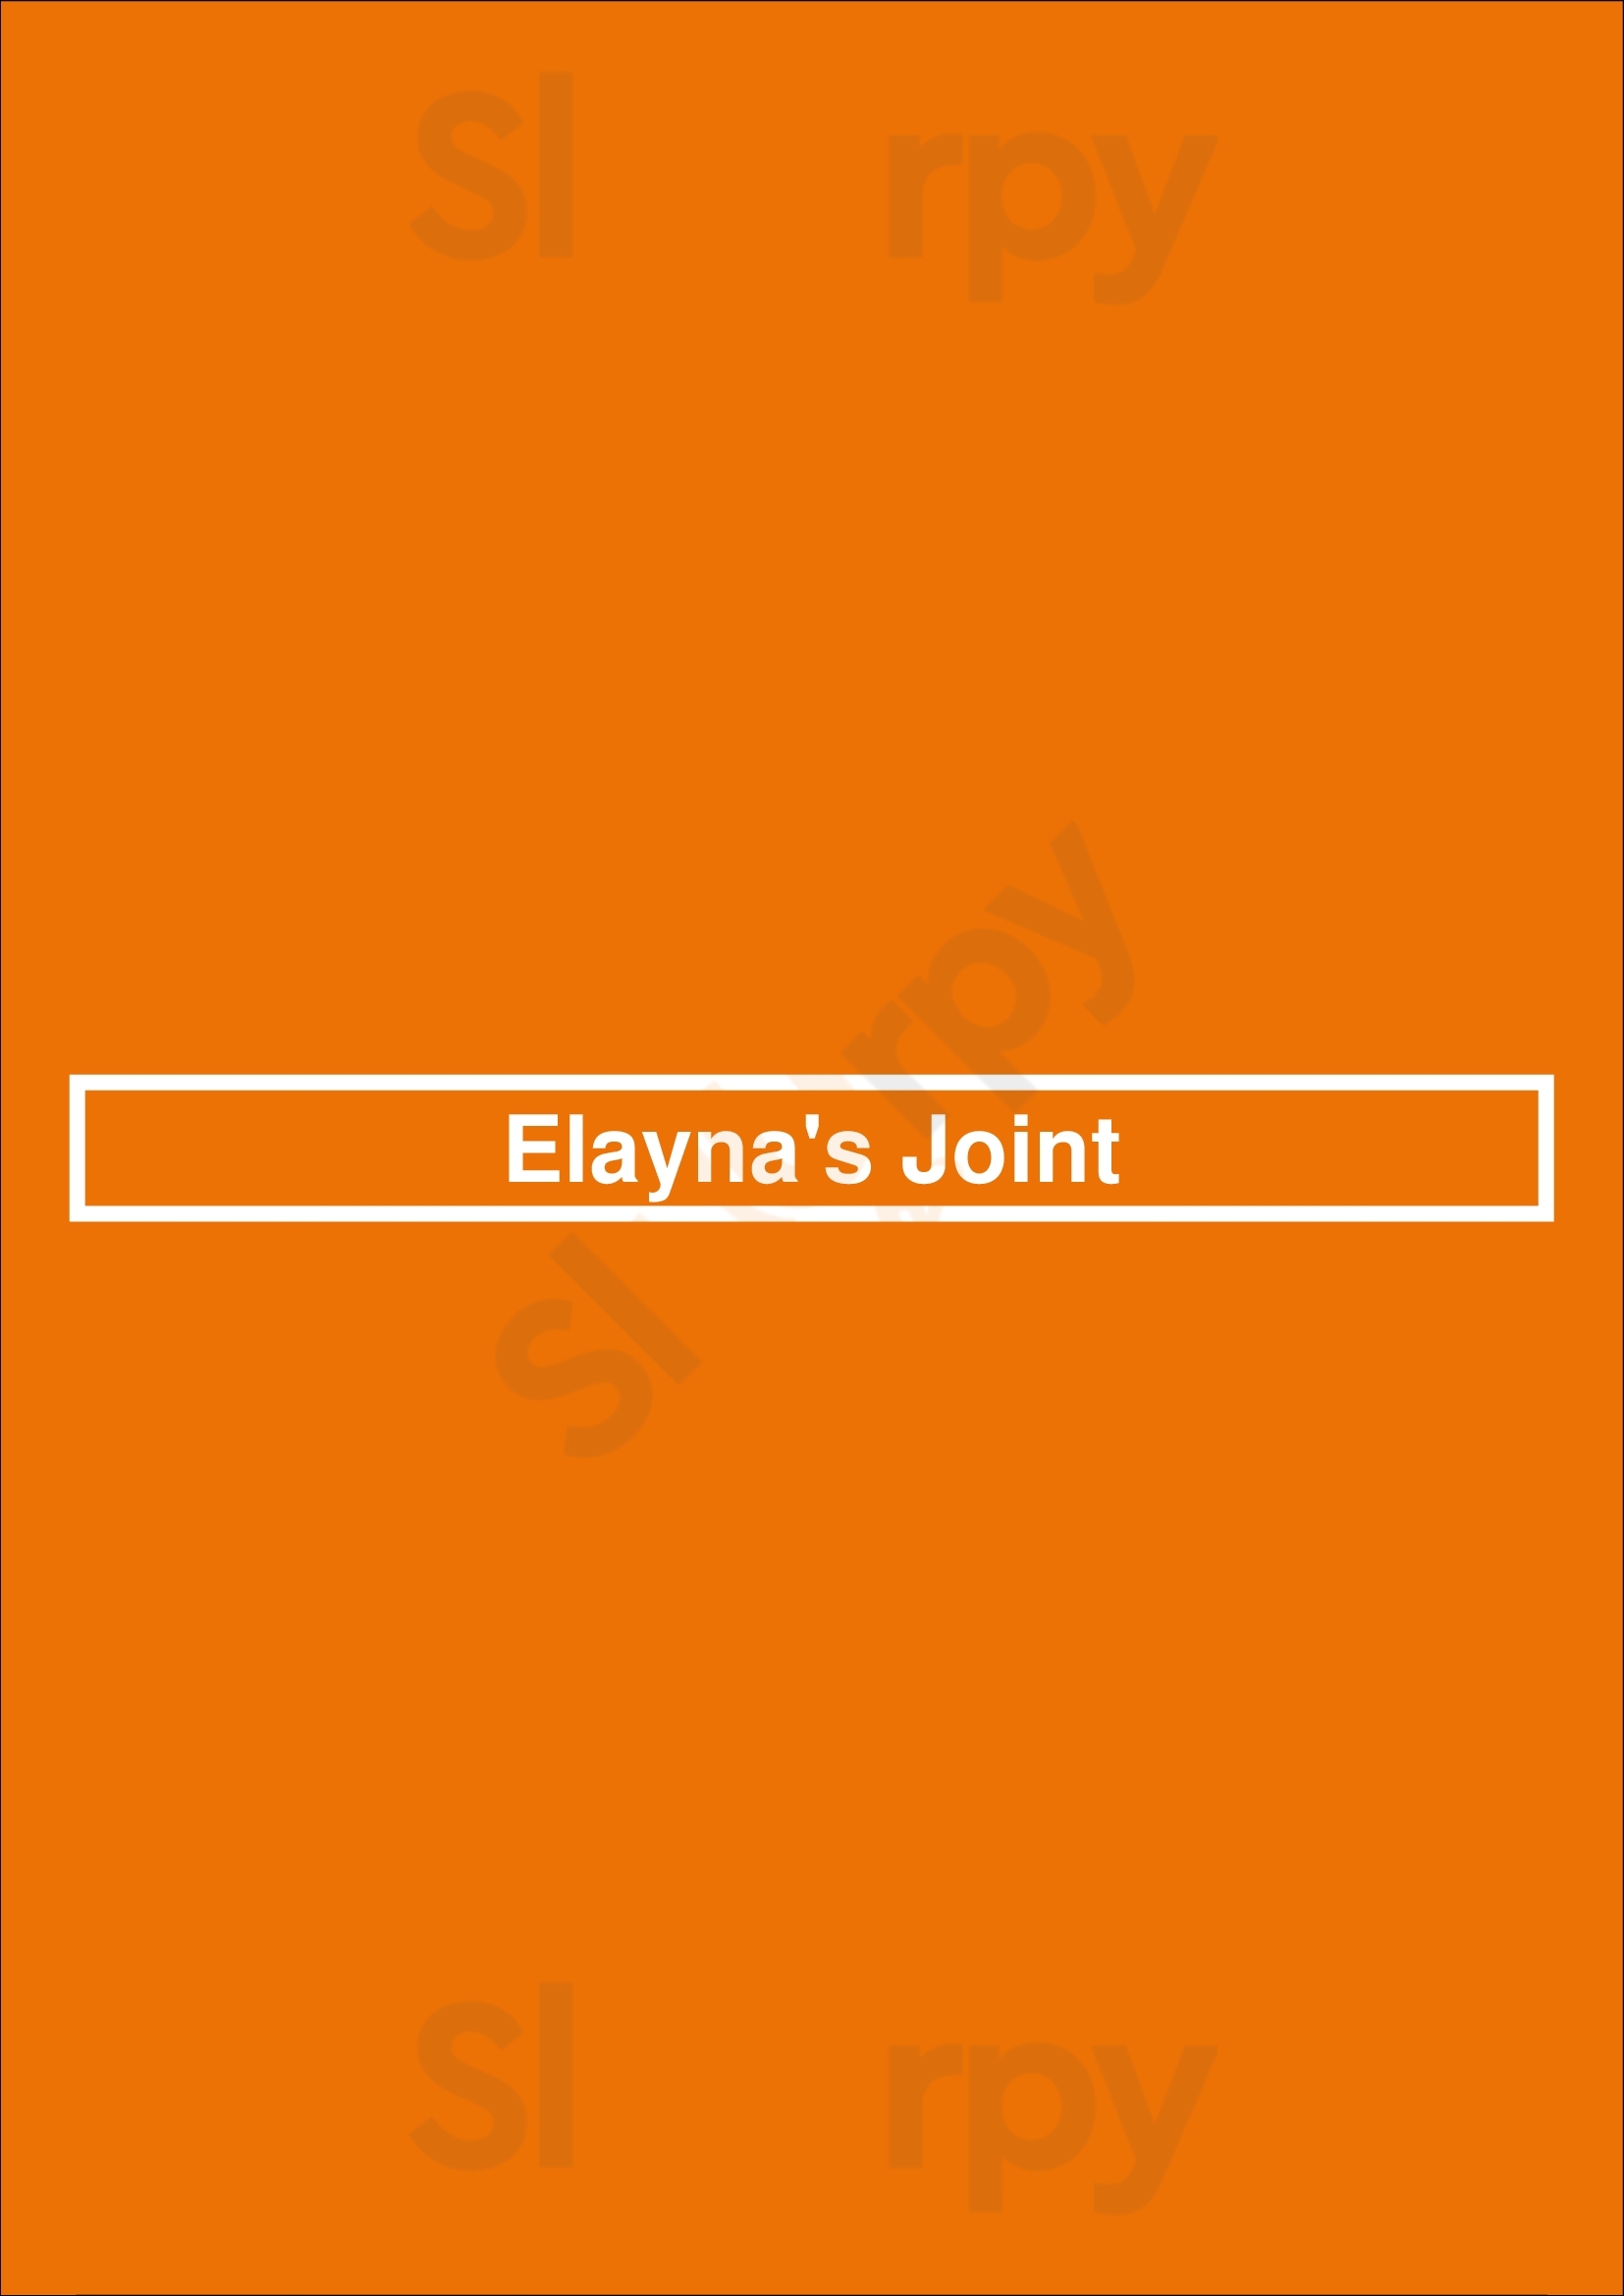 Elayna's Joint Toronto Menu - 1